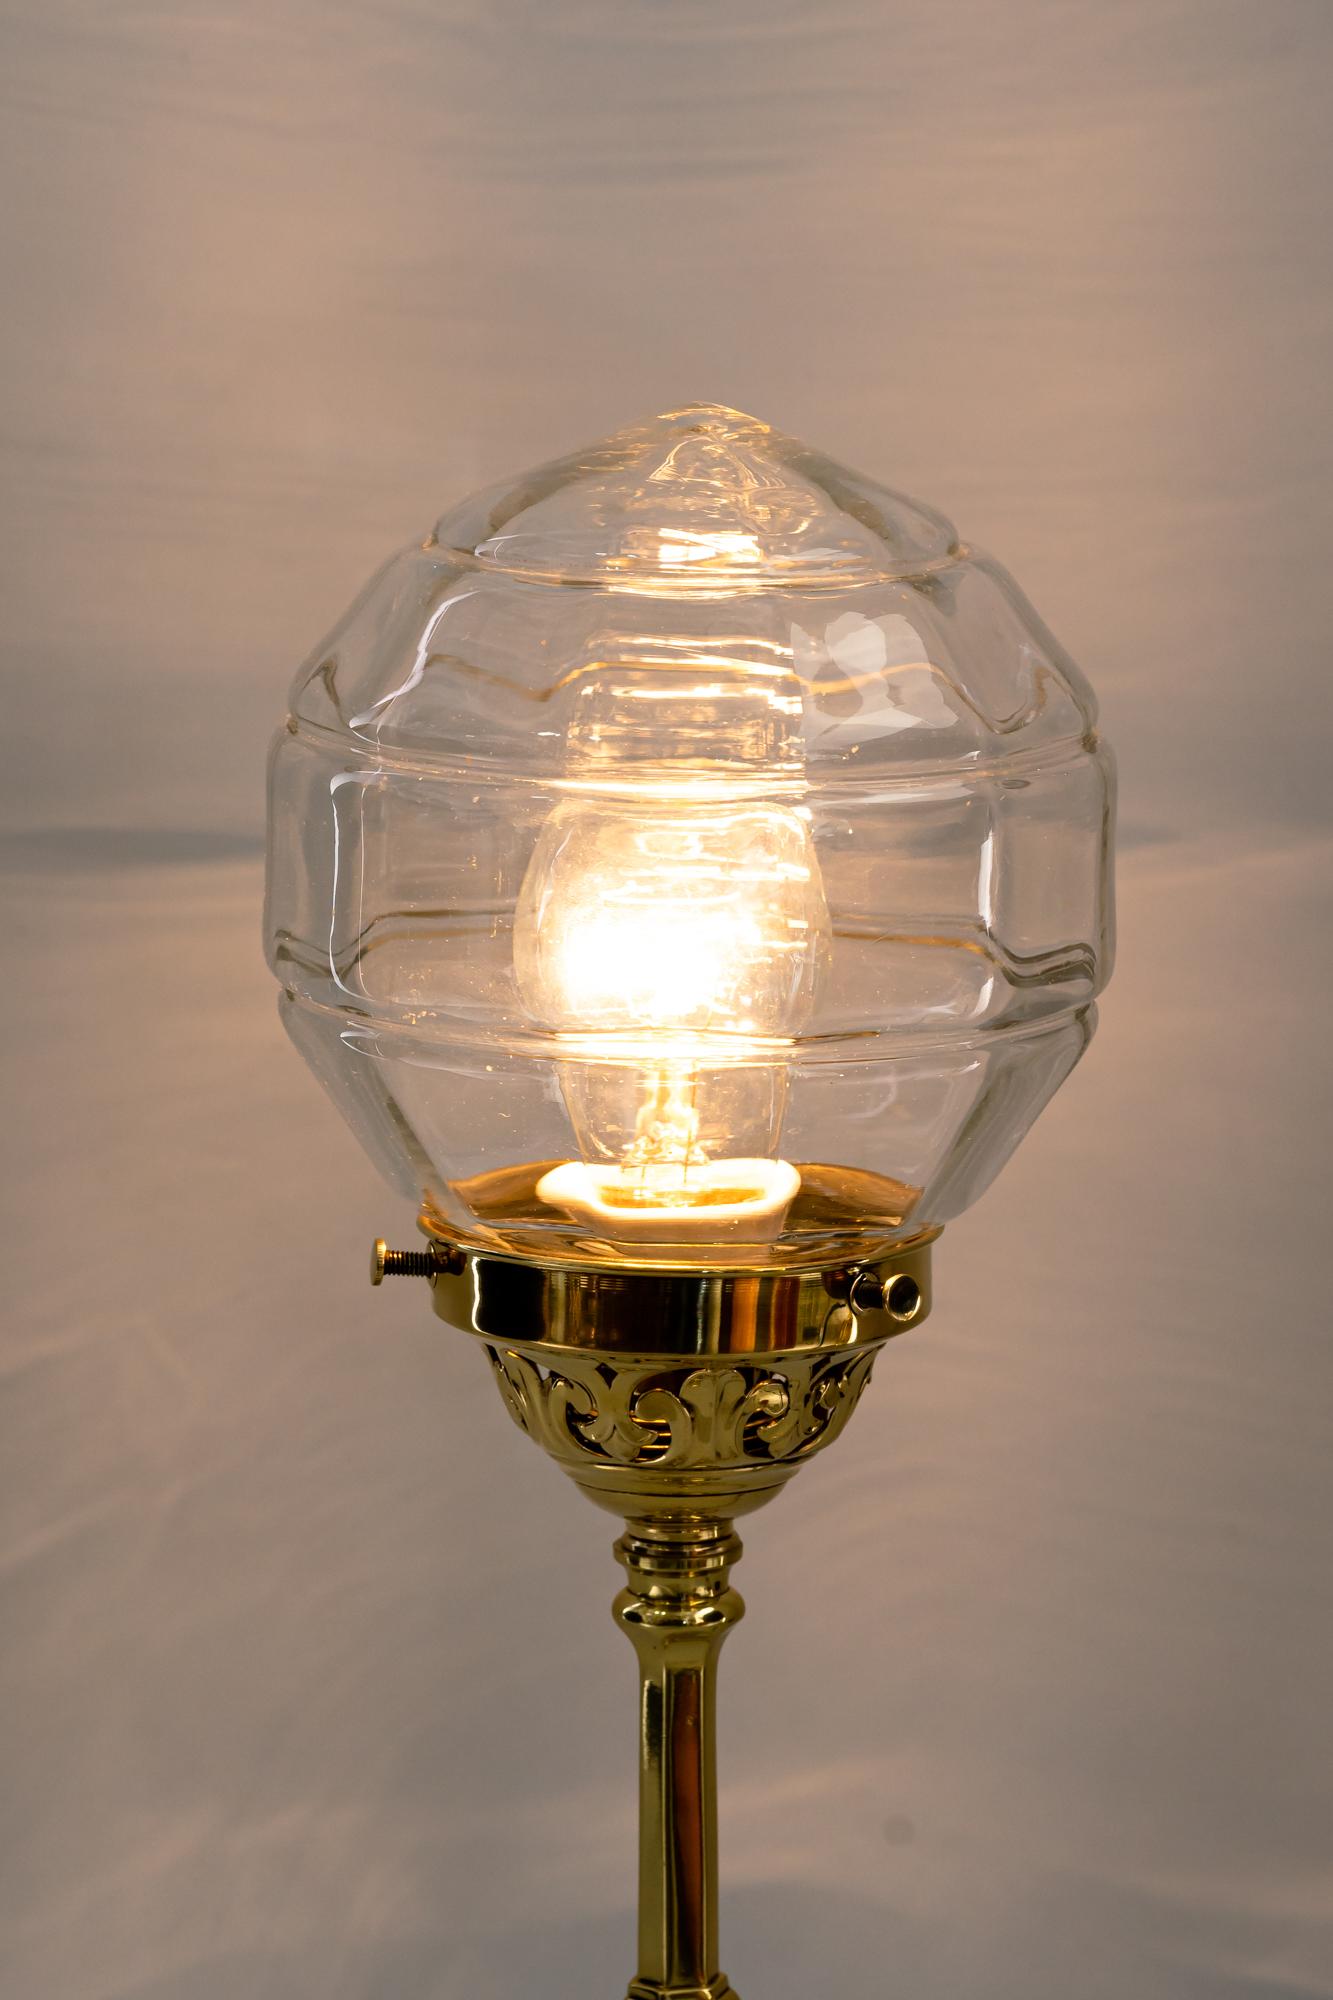 Jugendstil Table Lamp with Original Glass Shade, Vienna, Around 1910s 1